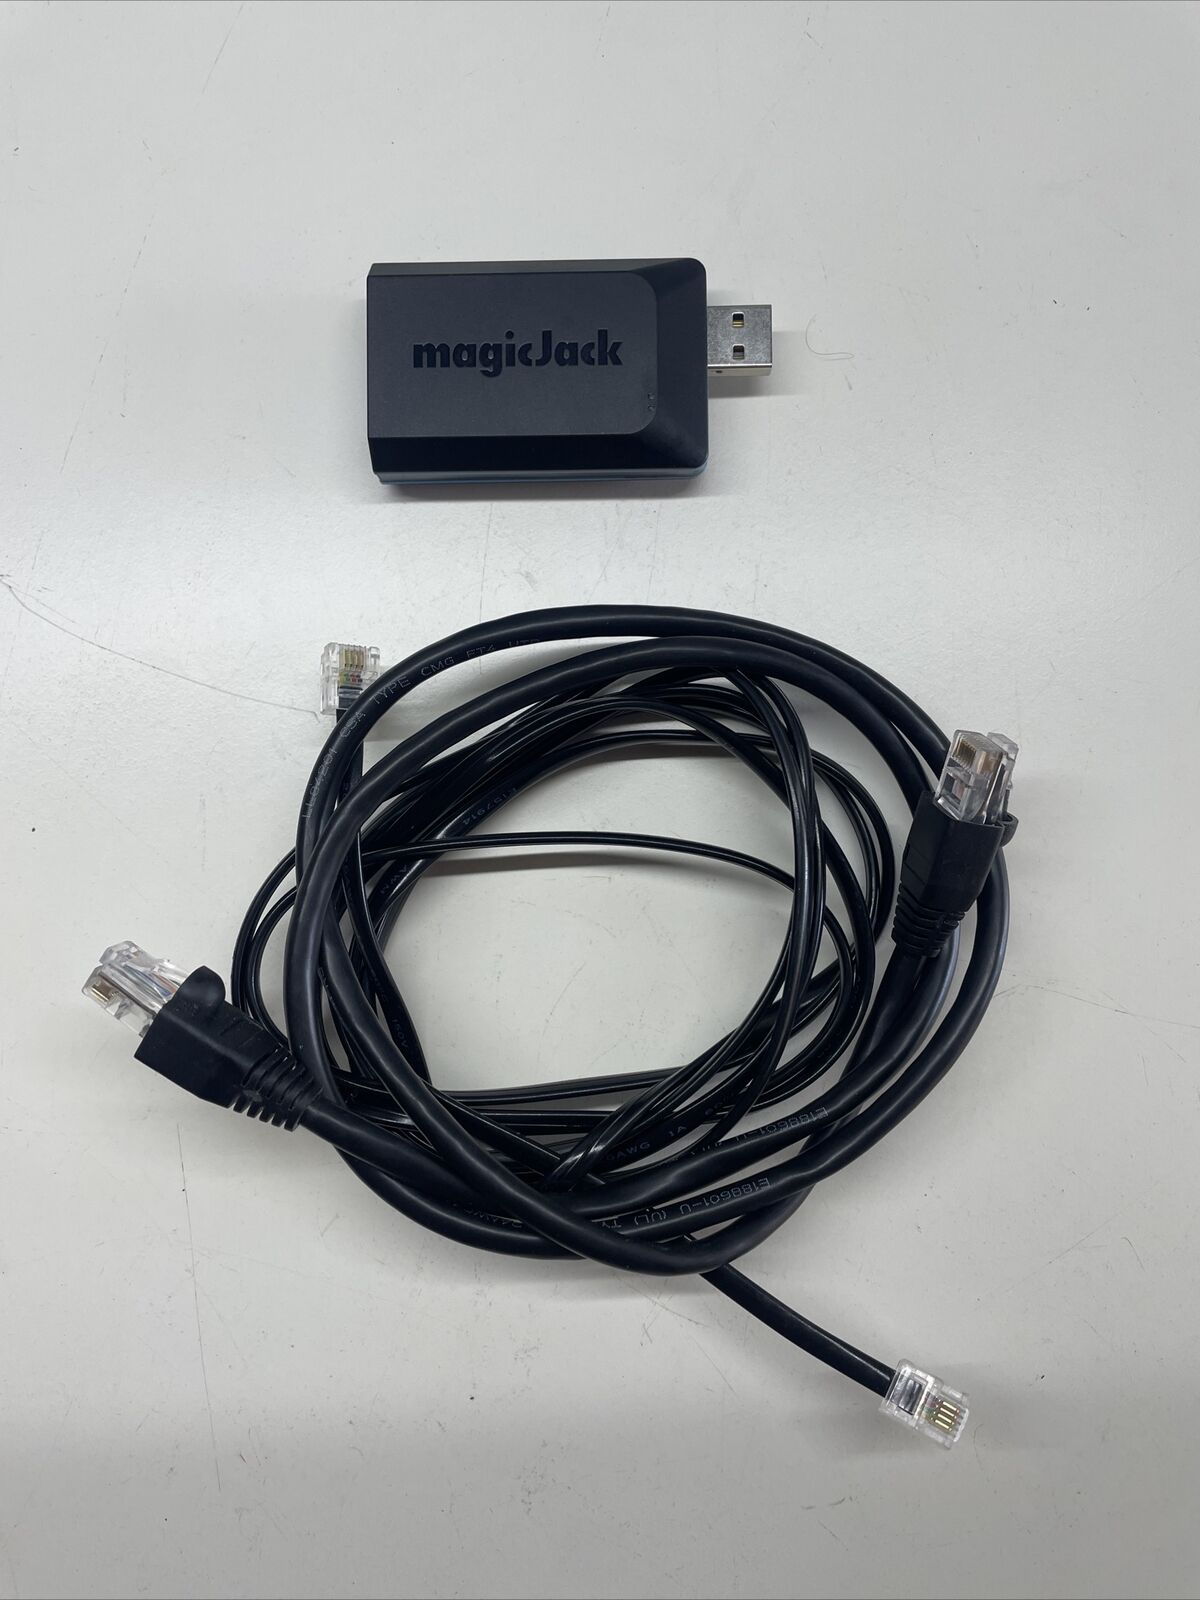 MagicJack Go K1103 USB, W/ Cables - Black